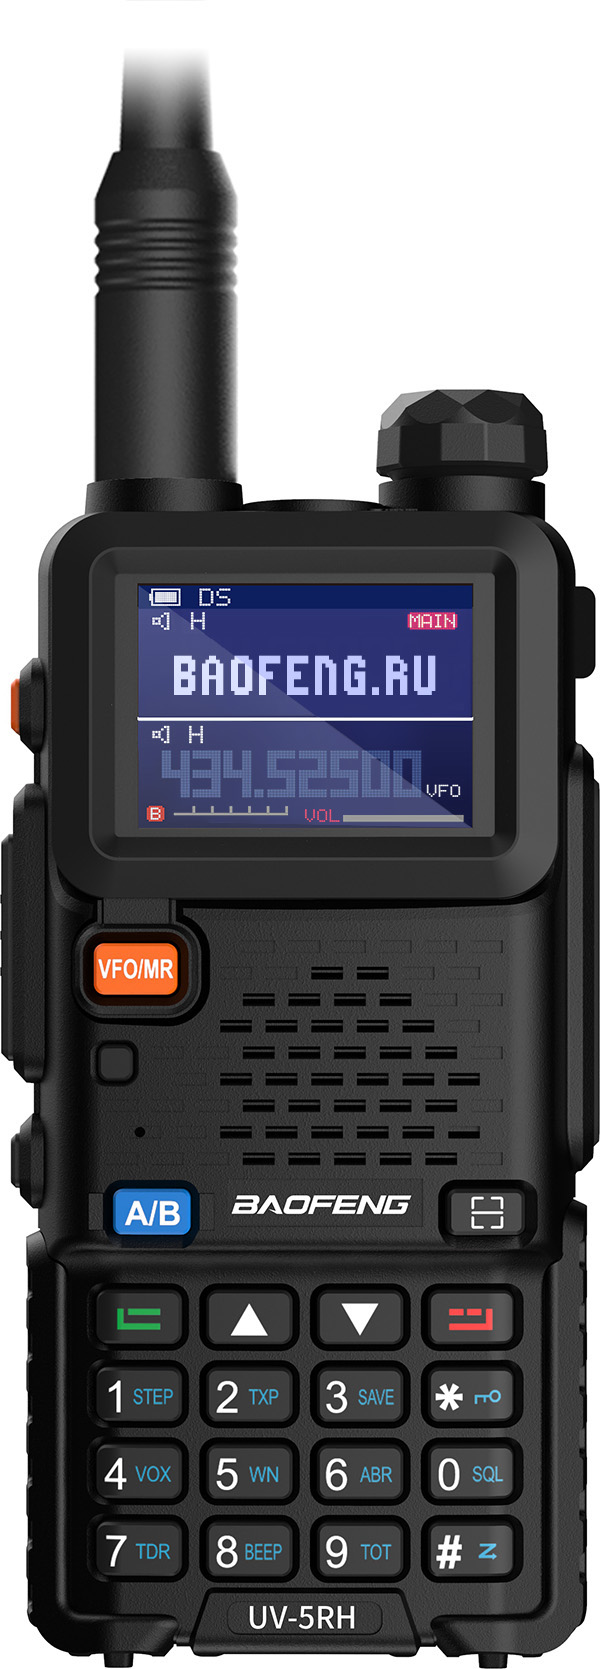 Рация Baofeng UV-5RH 10W рация с тангентой baofeng bf 888s shoulder speaker